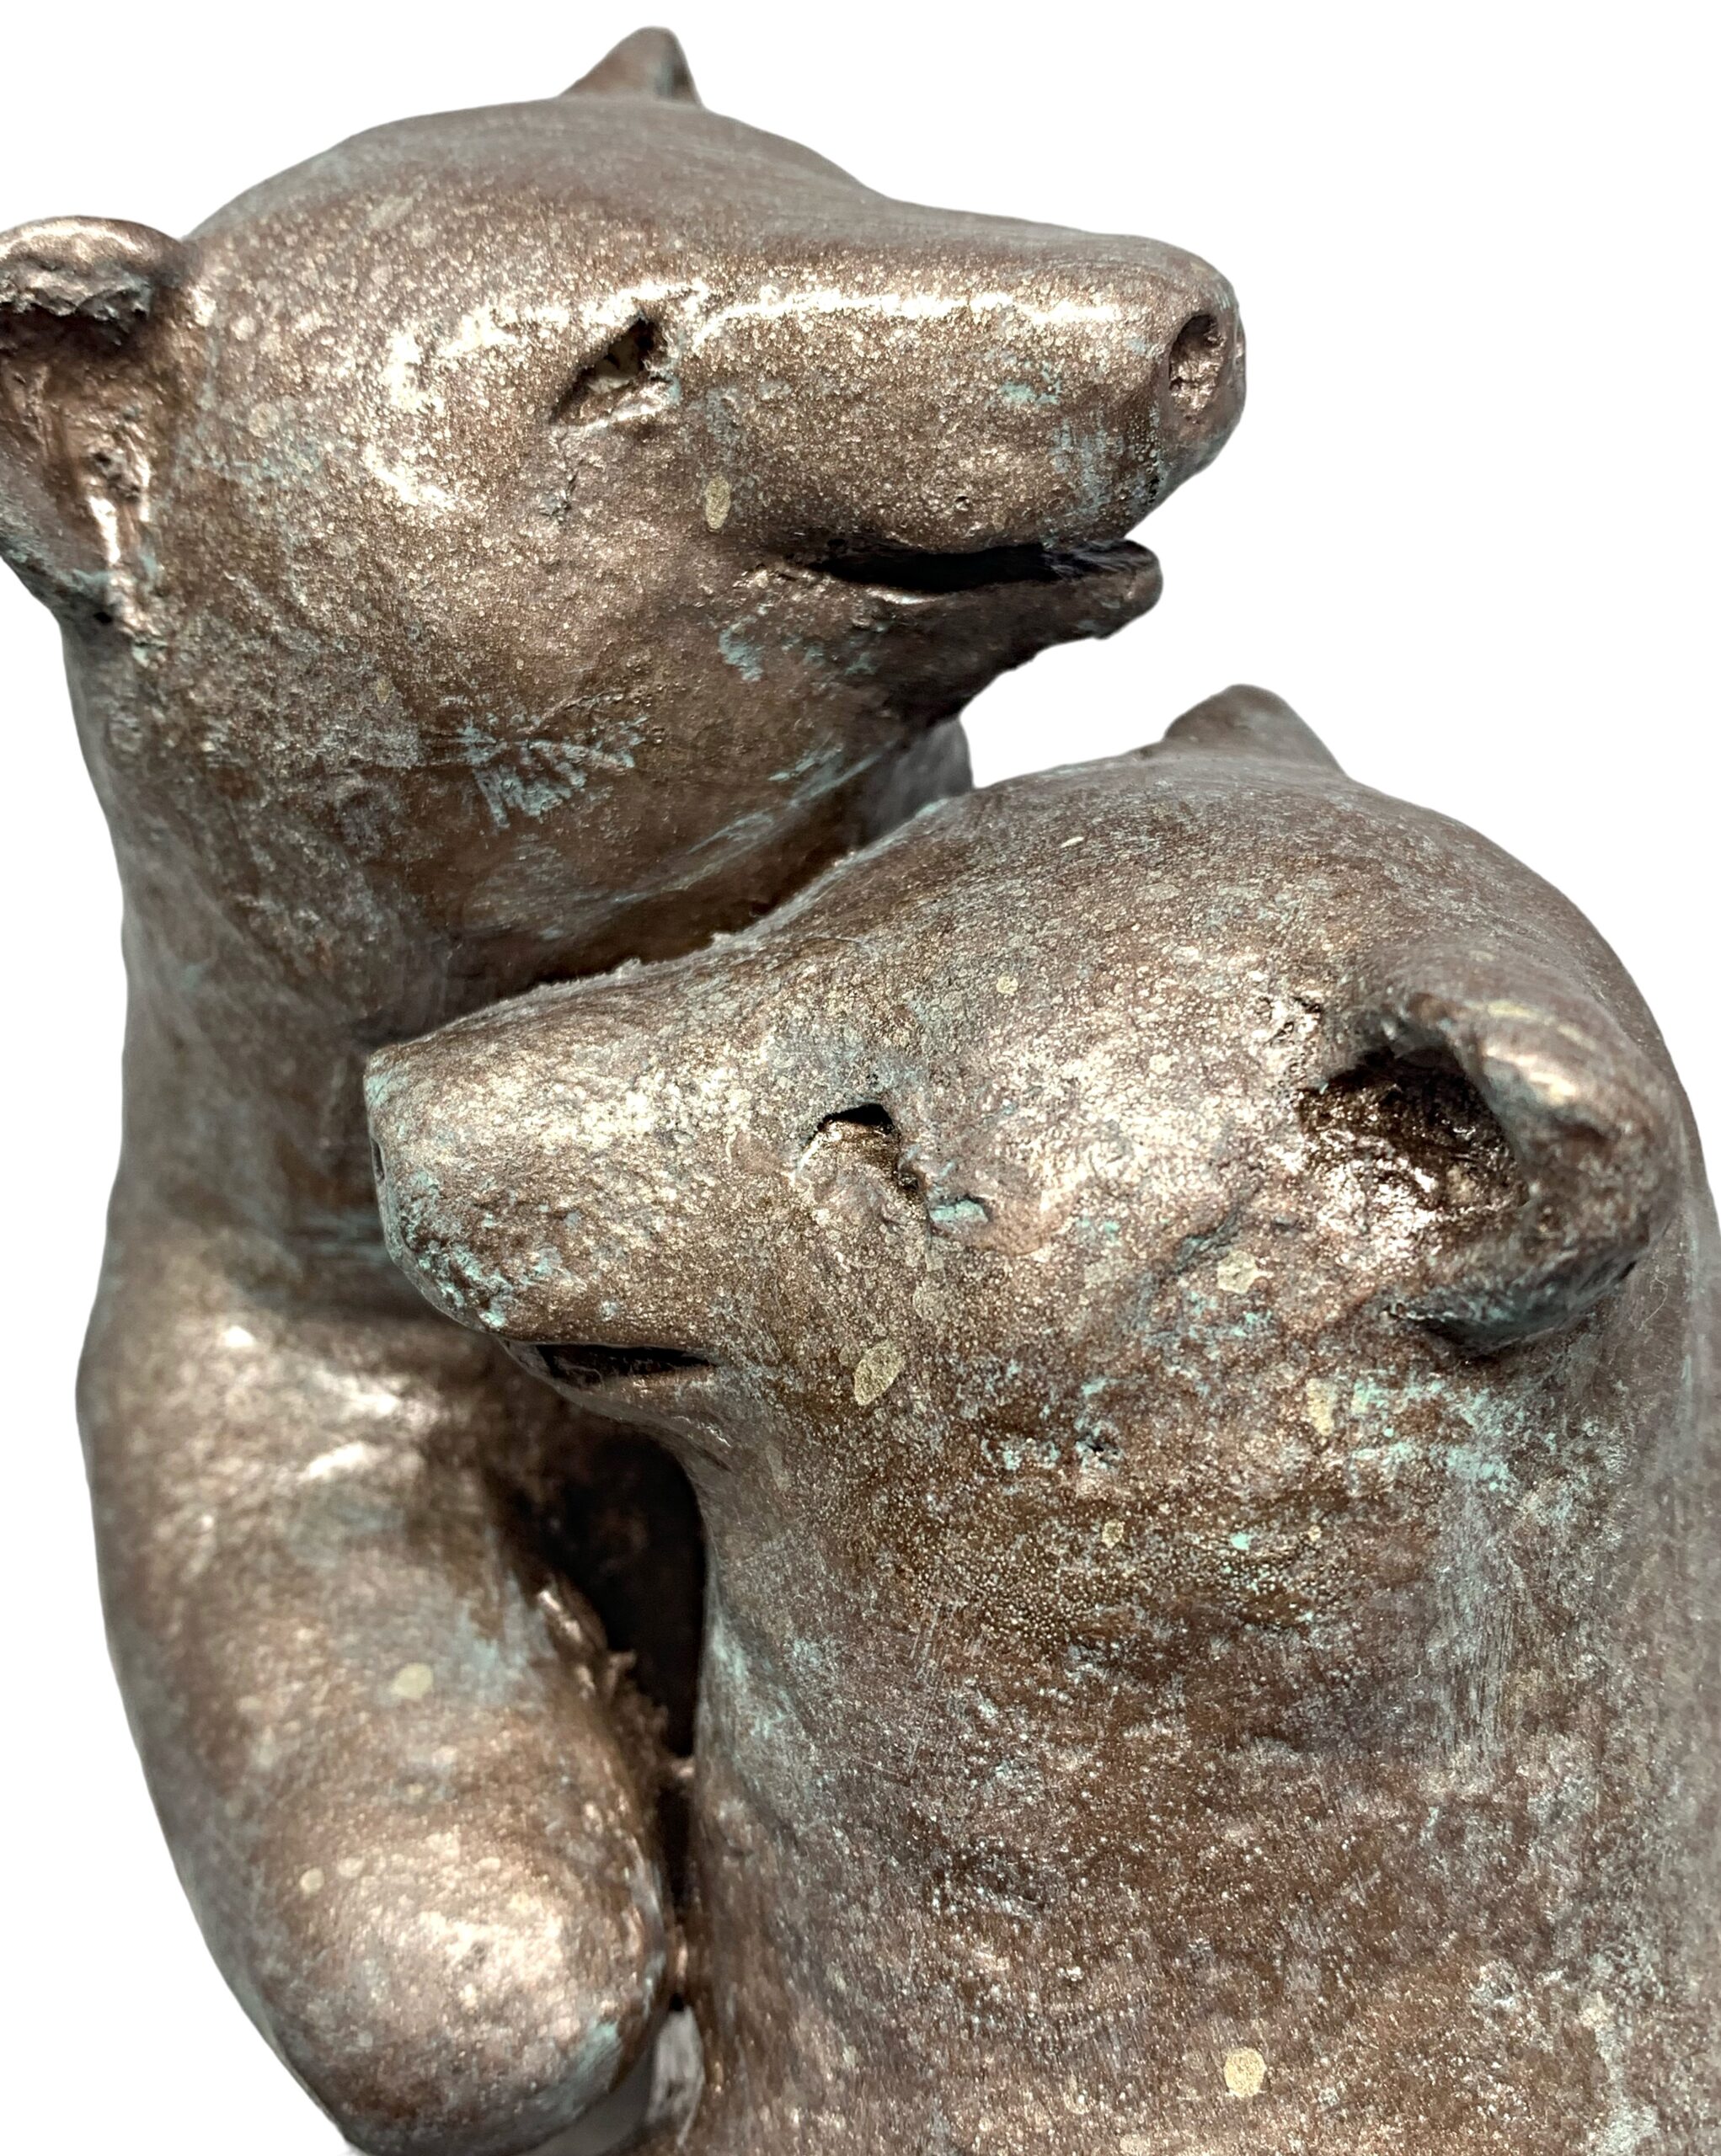 Group Hug, cute hugging mixed media bear sculptures by Karin Taylor at Effusion Art Gallery in Invermere, BC.